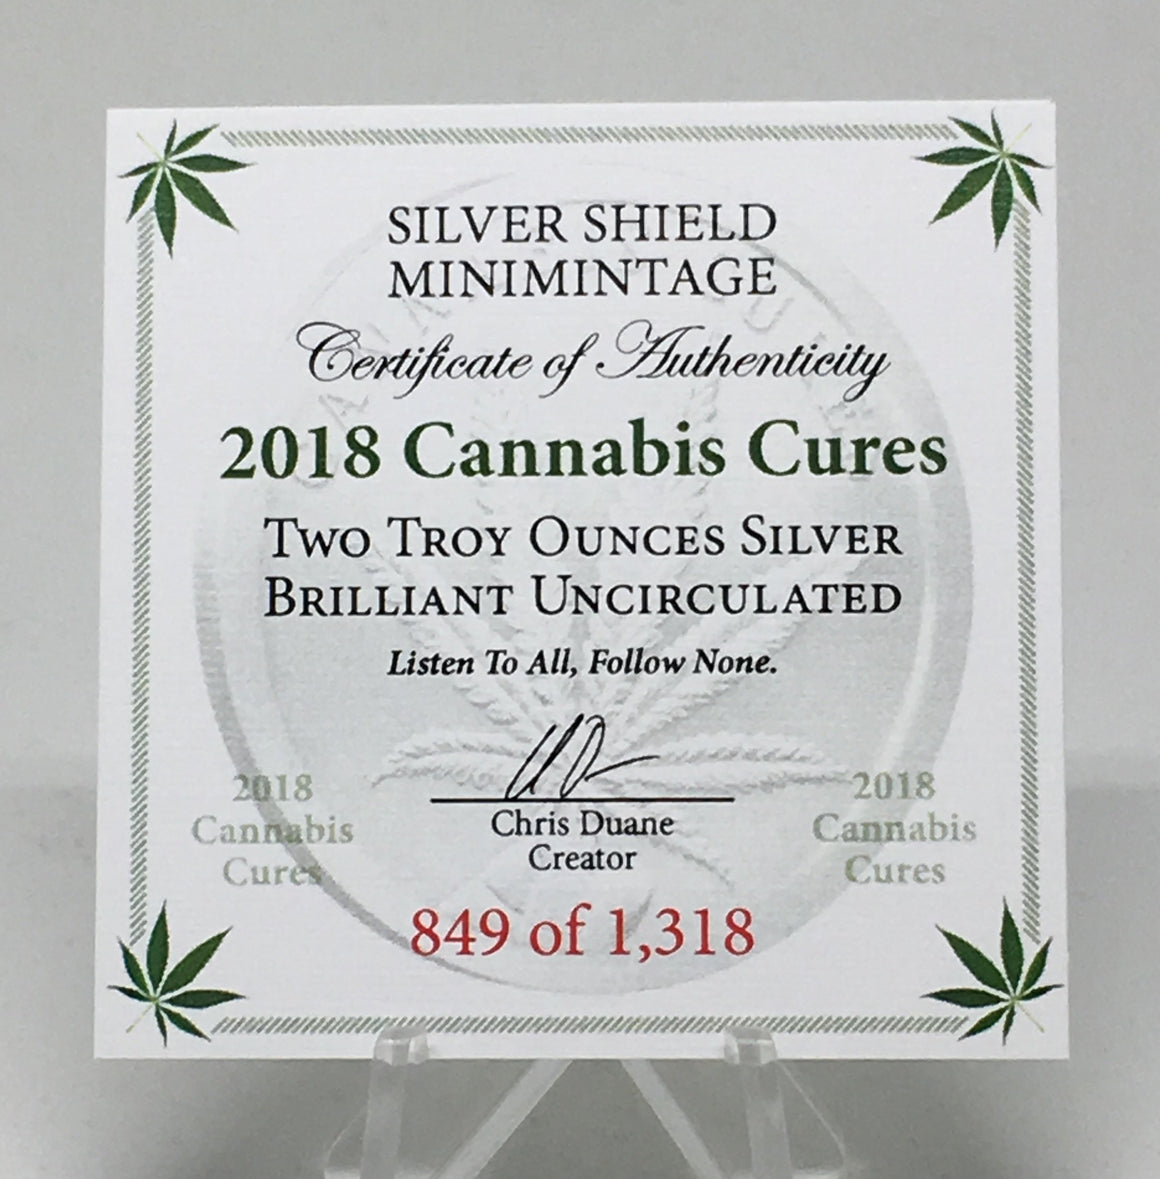 2018 Cannabis Cures by Silver Shield, Mini Mintage - BU 2 oz .999 Silver Round